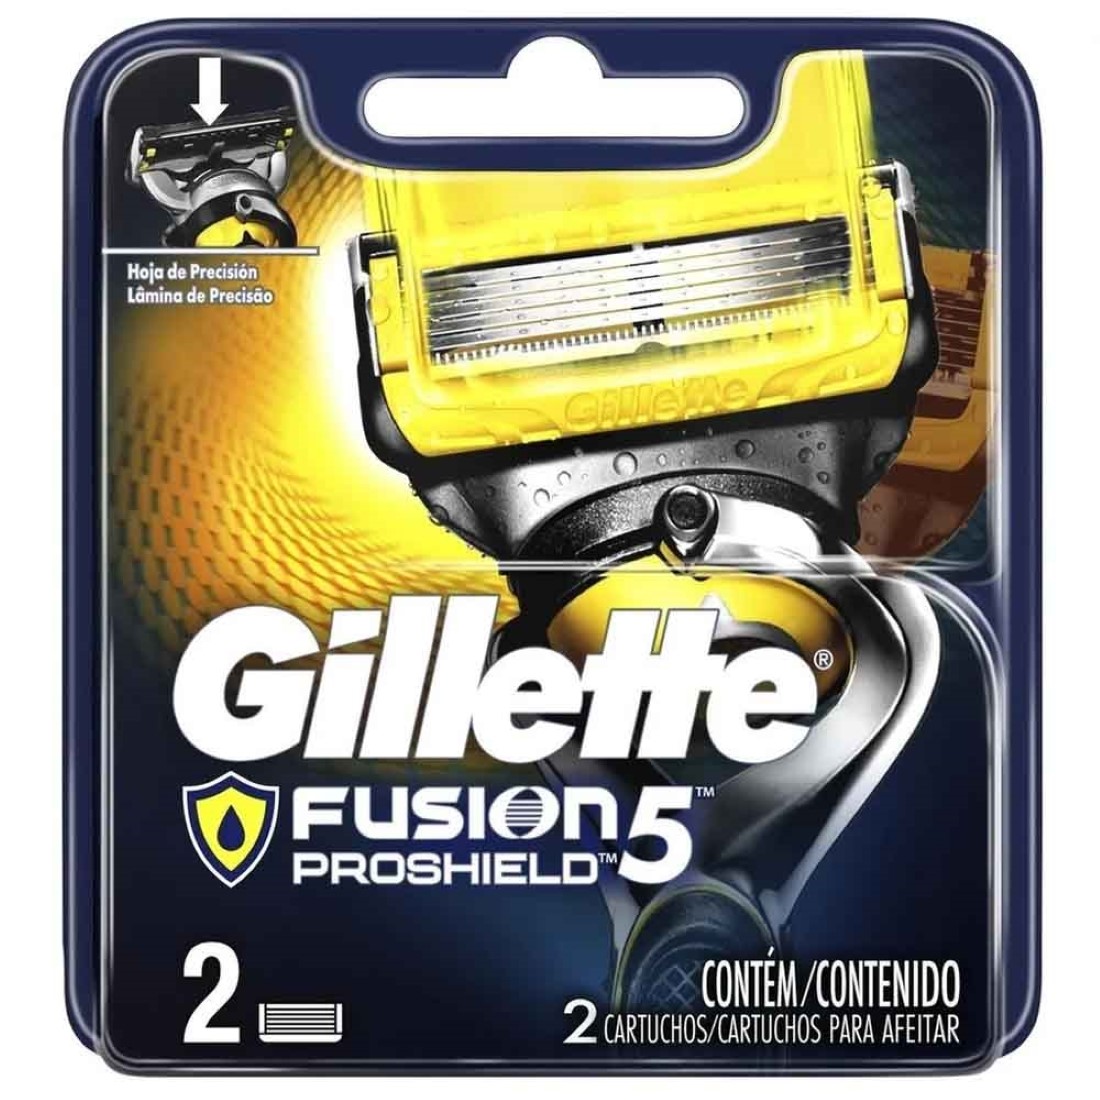 Carga Fusion5 Proshield com 2 Cartuchos - Gillette